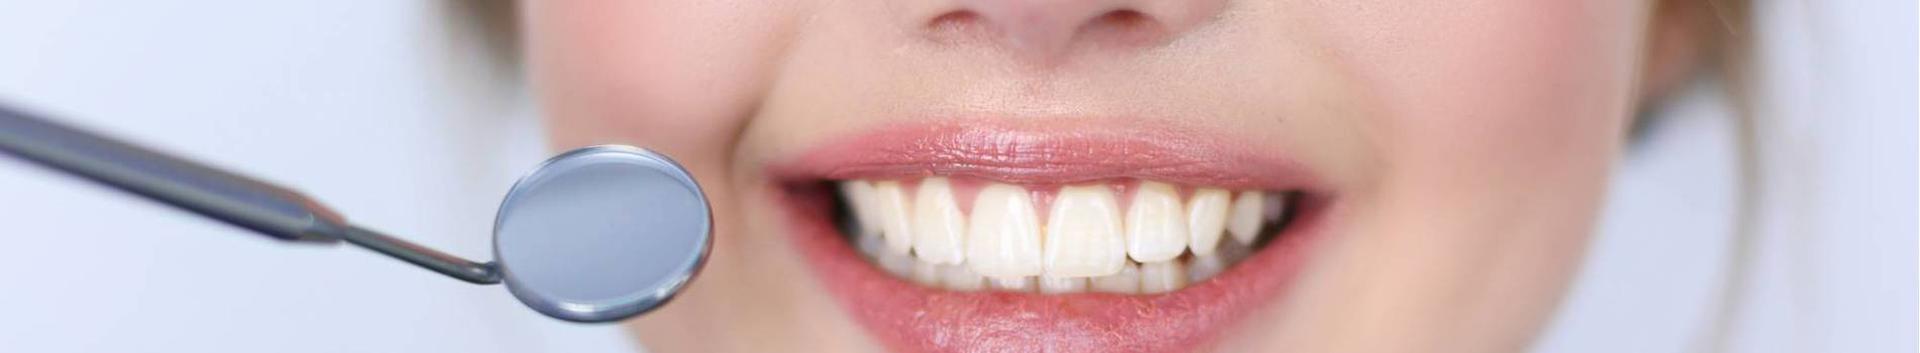 Dentist, Dental Surgery, Dental crowns and bridges, Dental prosthesis, oral hygiene